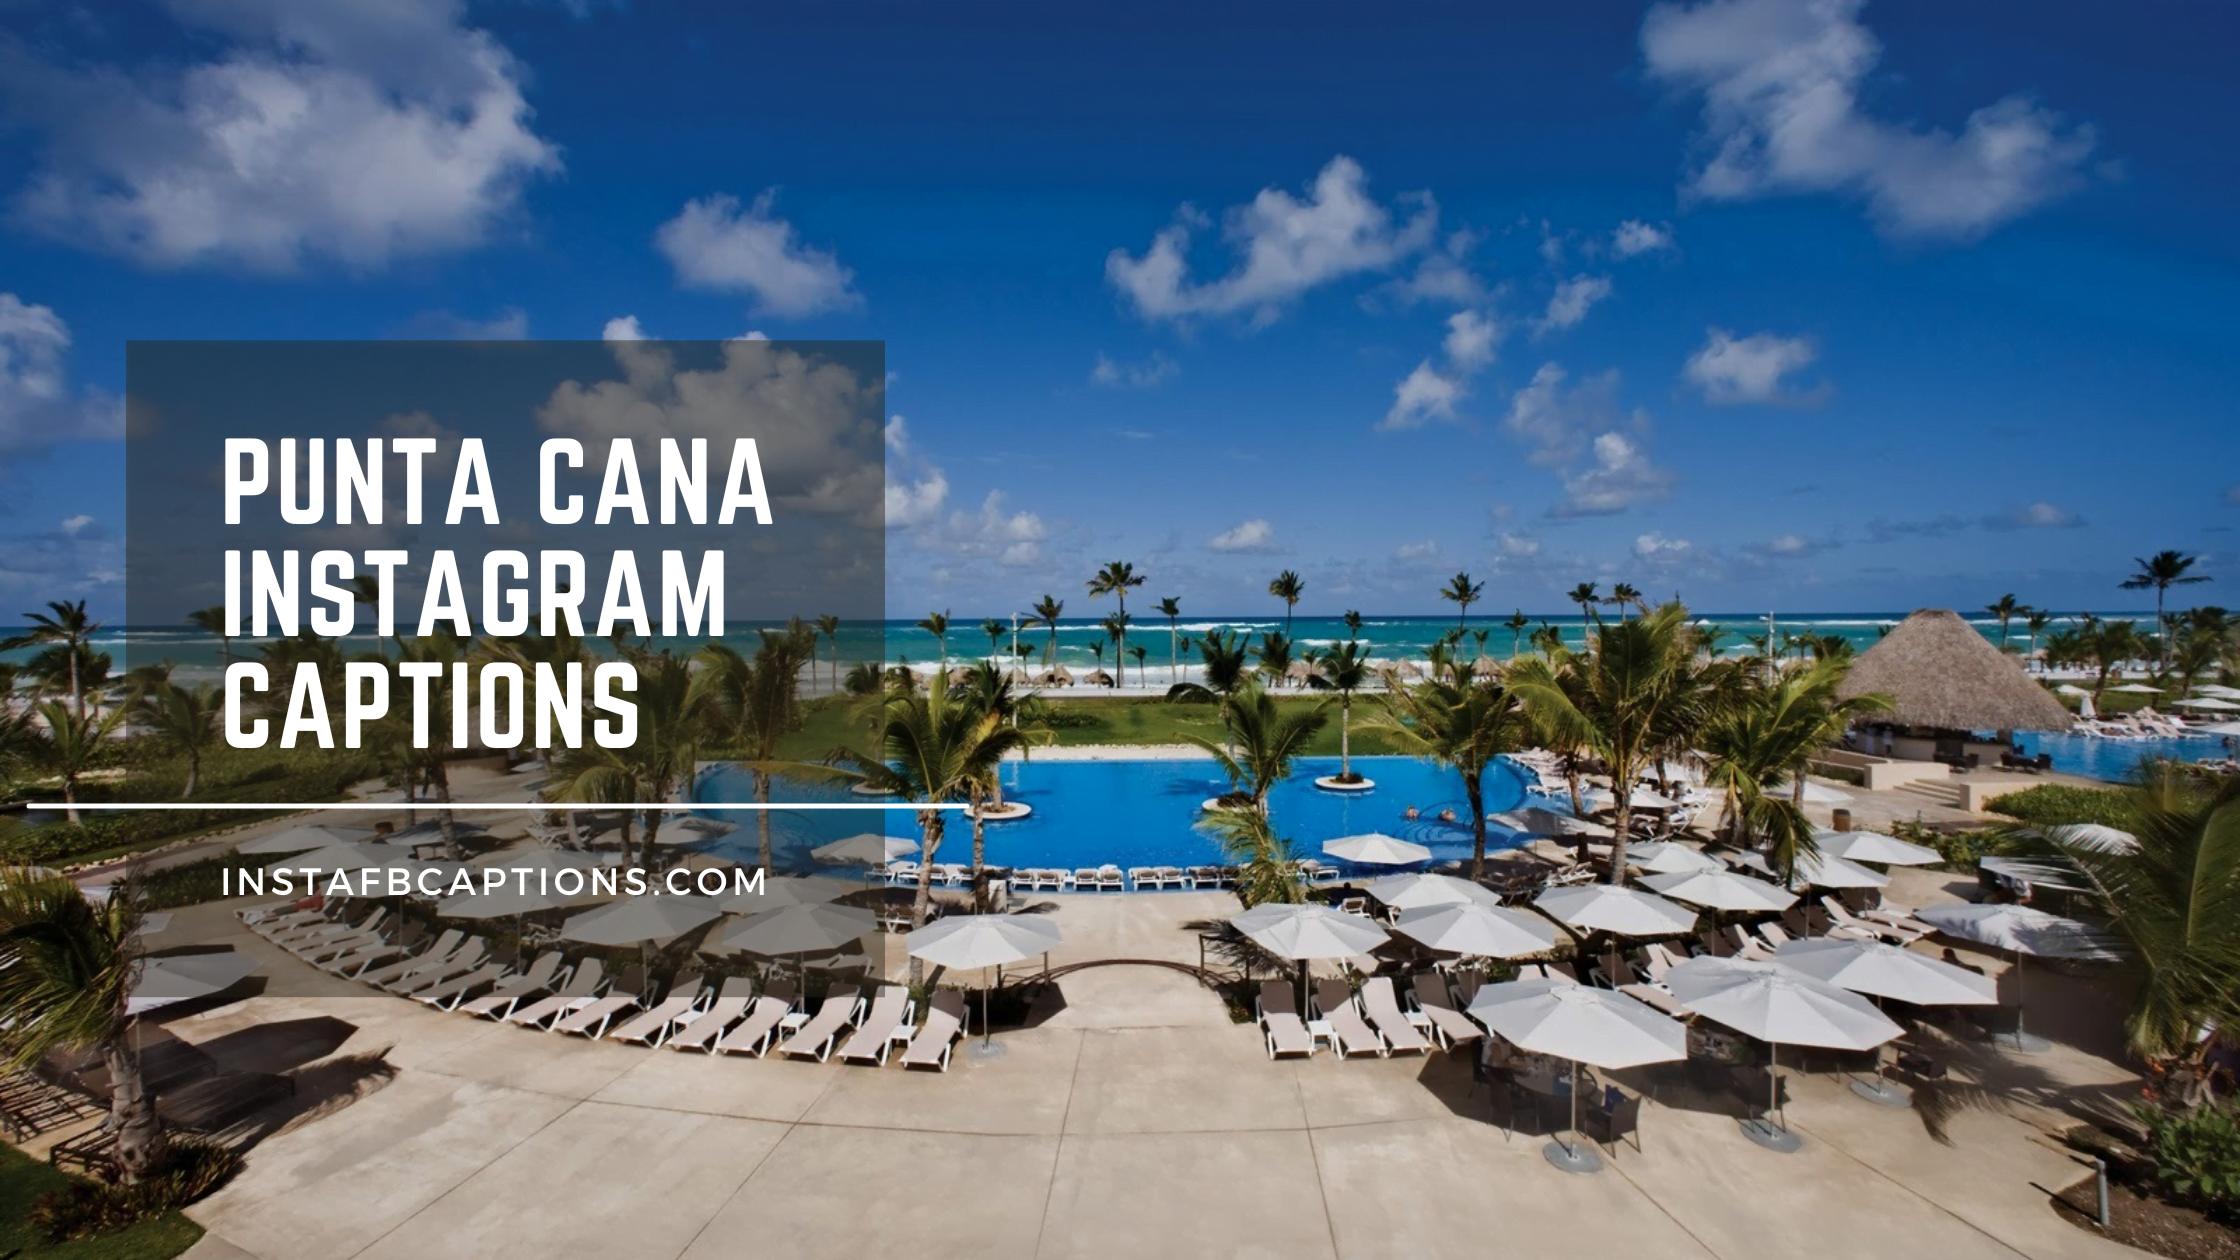 Punta Cana Instagram Captions  - Punta Cana Instagram Captions - Punta Cana Captions for Posting on Instagram in 2022